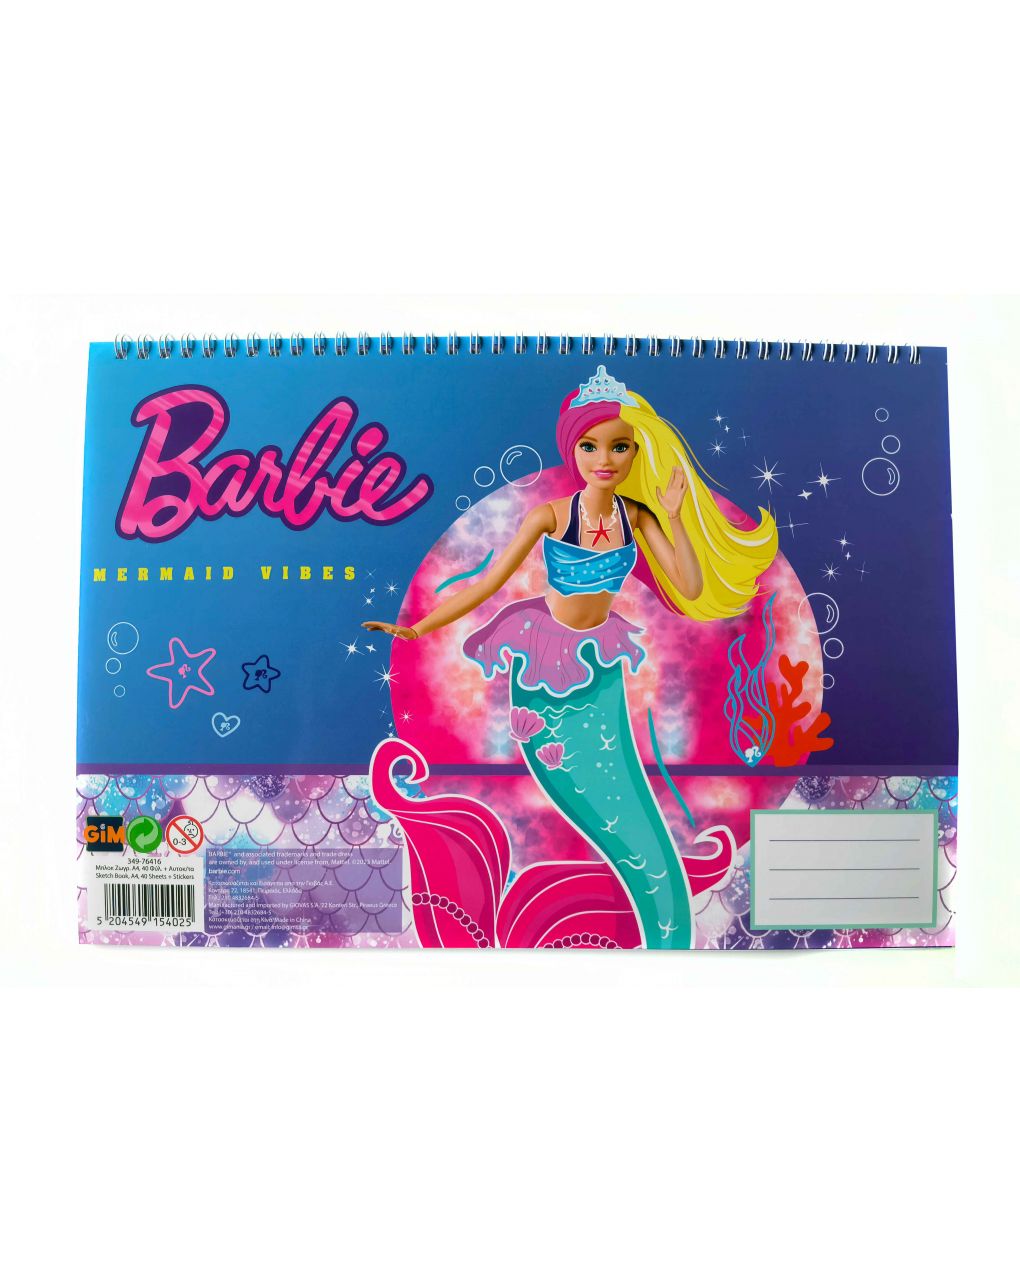 Gim μπλοκ ζωγραφικής 23x33cm 40 φύλλων + αυτοκόλλητα barbie 349-76416 - Gim